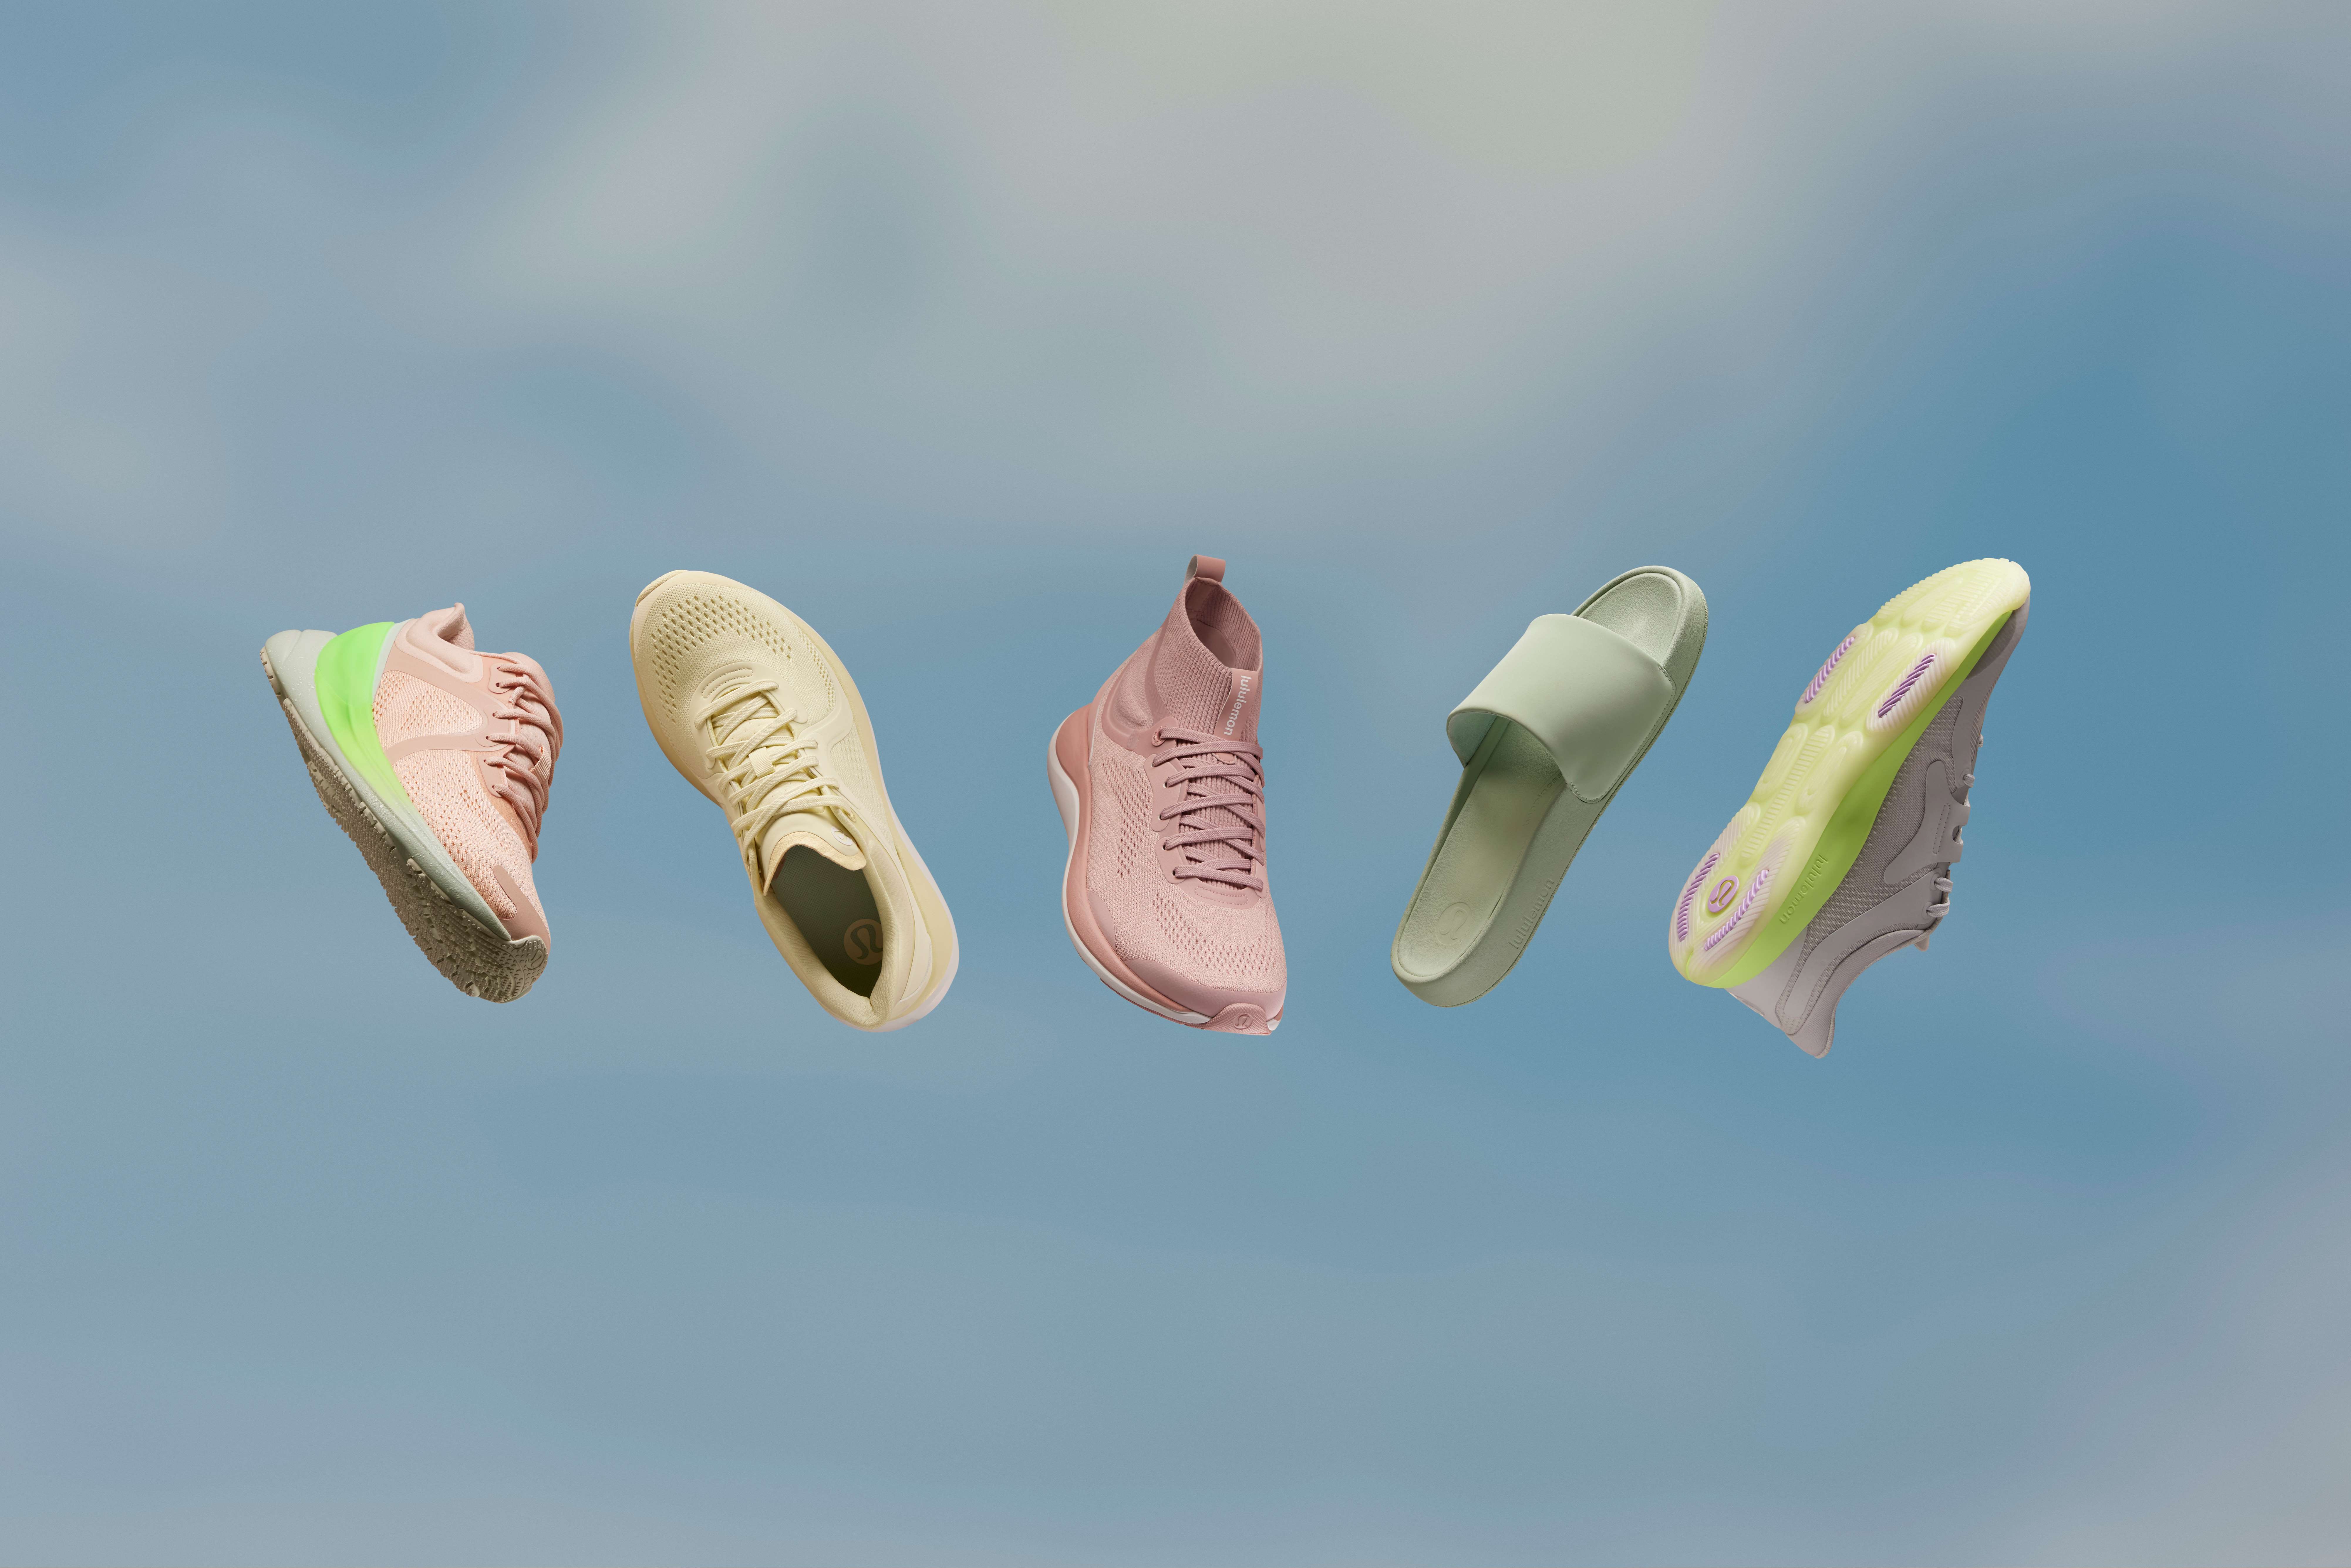 Lululemon footwear marks new product to take on Nike, Adidas